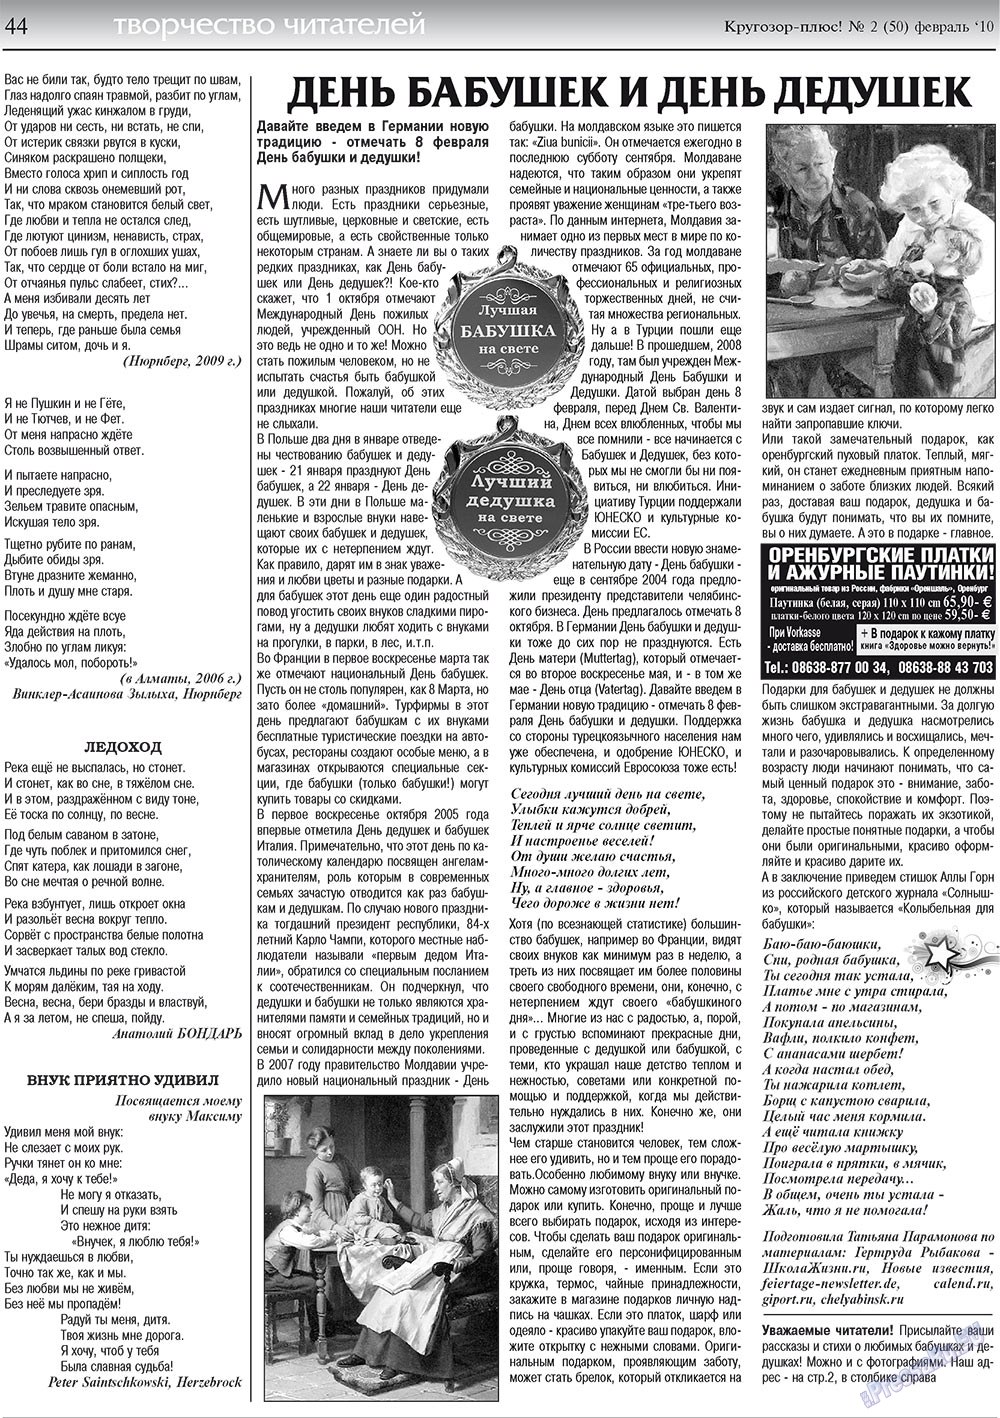 Кругозор плюс! (газета). 2010 год, номер 2, стр. 44